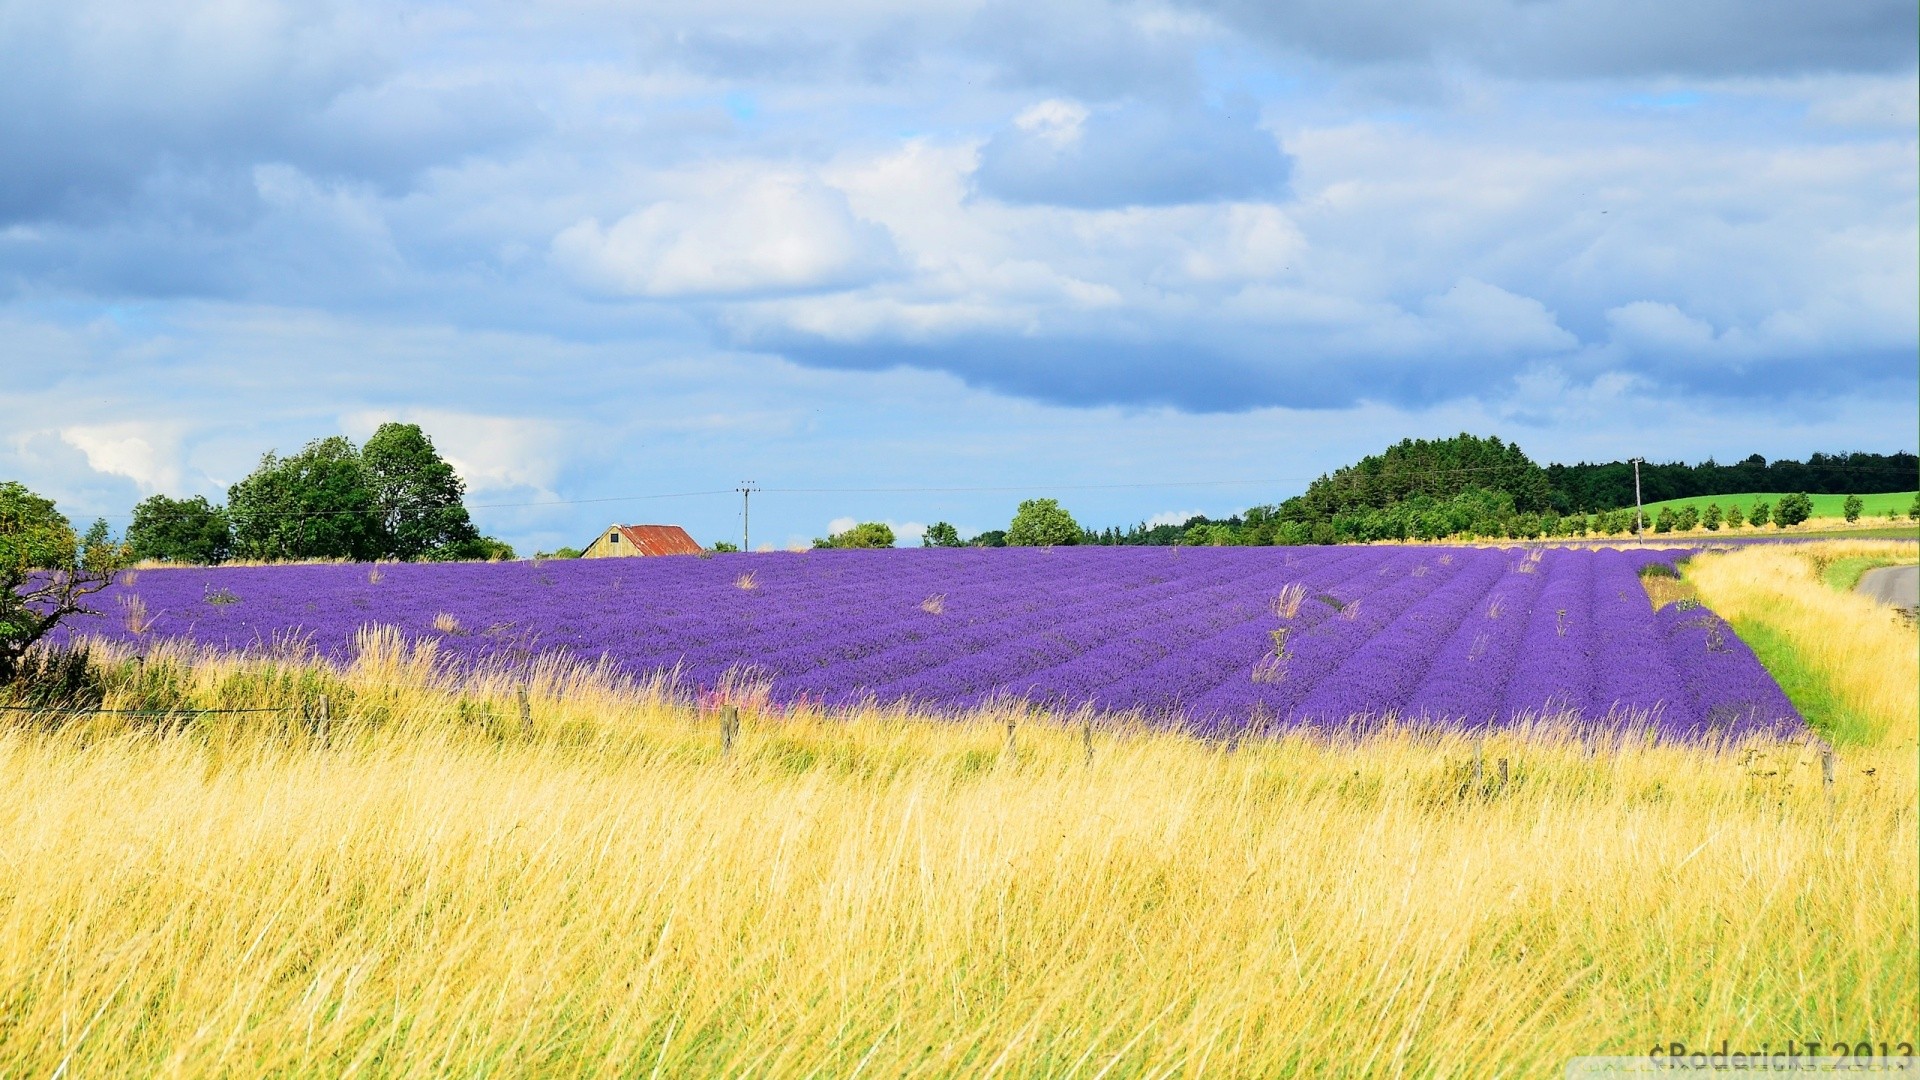 General 1920x1080 lavender UK field landscape purple flowers clouds Agro (Plants) outdoors plants 2013 (Year)